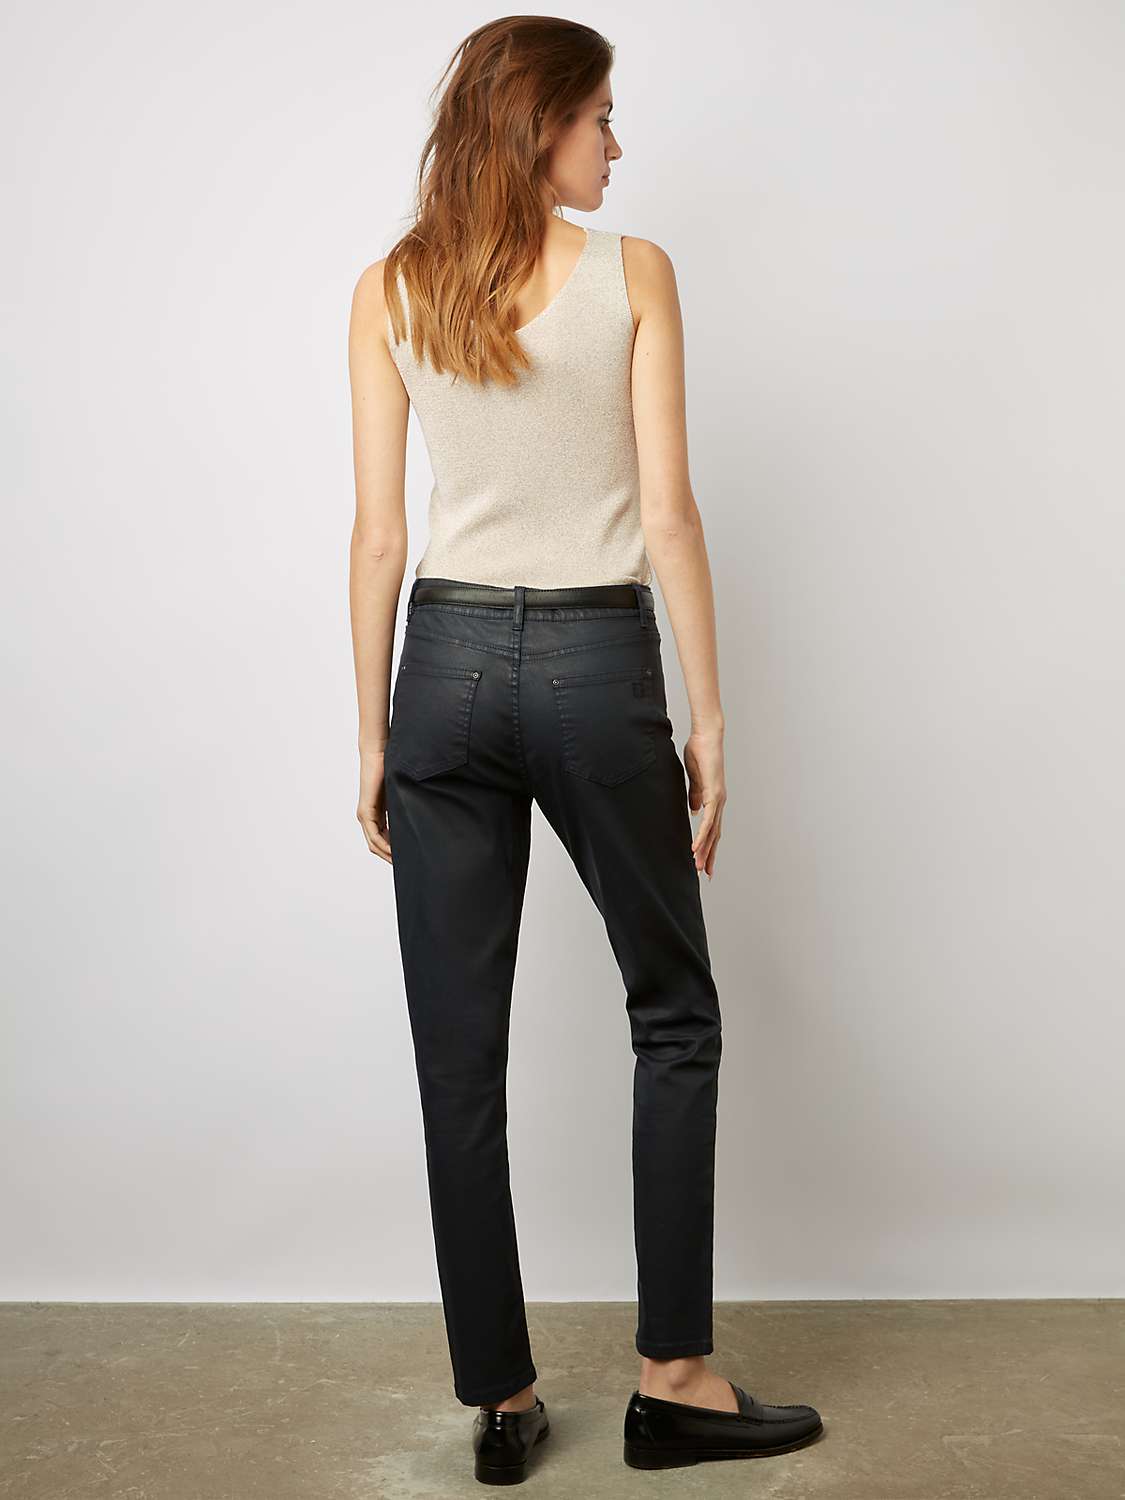 Buy Gerard Darel Cindy Coated Slim Leg Jeans, Navy Online at johnlewis.com